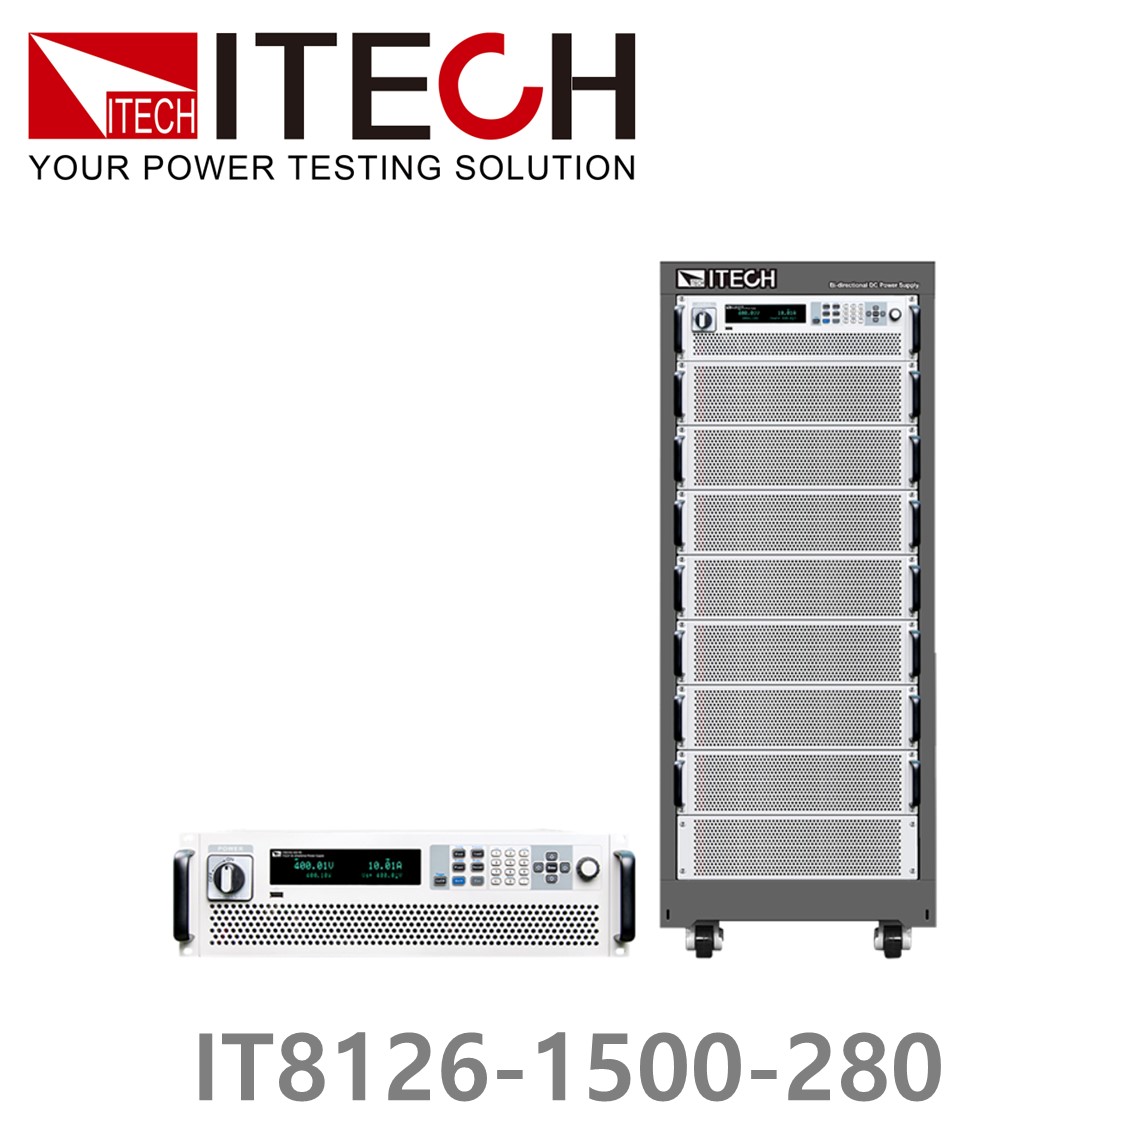 [ ITECH ] IT8126-1500-280  회생형 DC전자로드, DC전자부하 1500V/280A/126kW (27U)